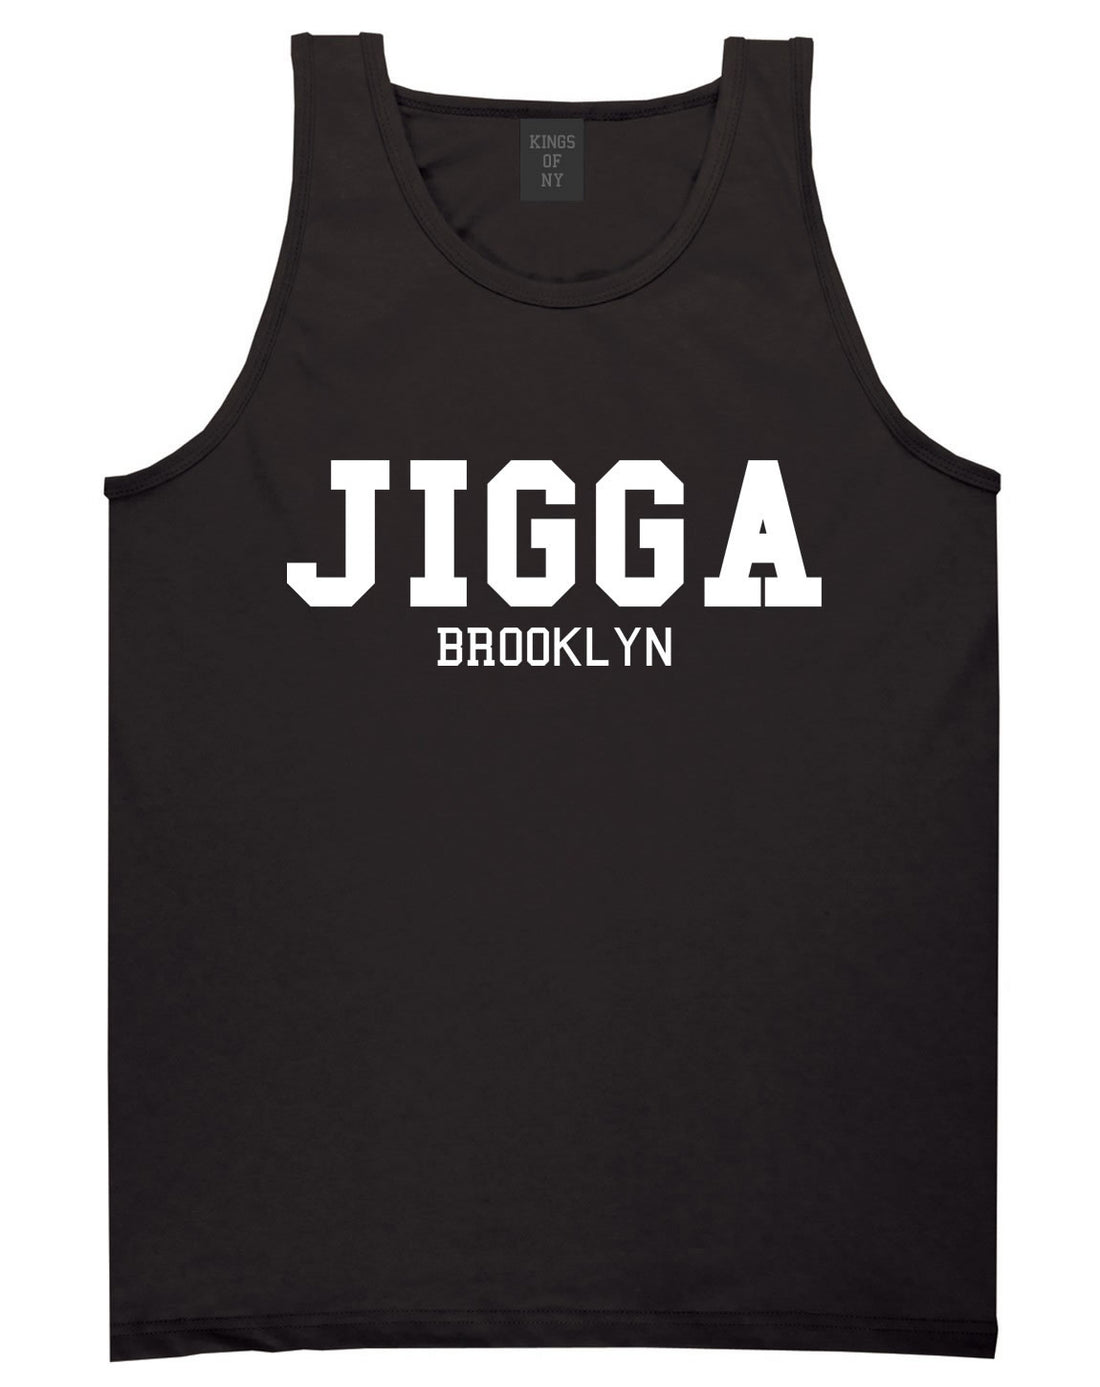 Jigga Brooklyn Tank Top in Black by Kings Of NY